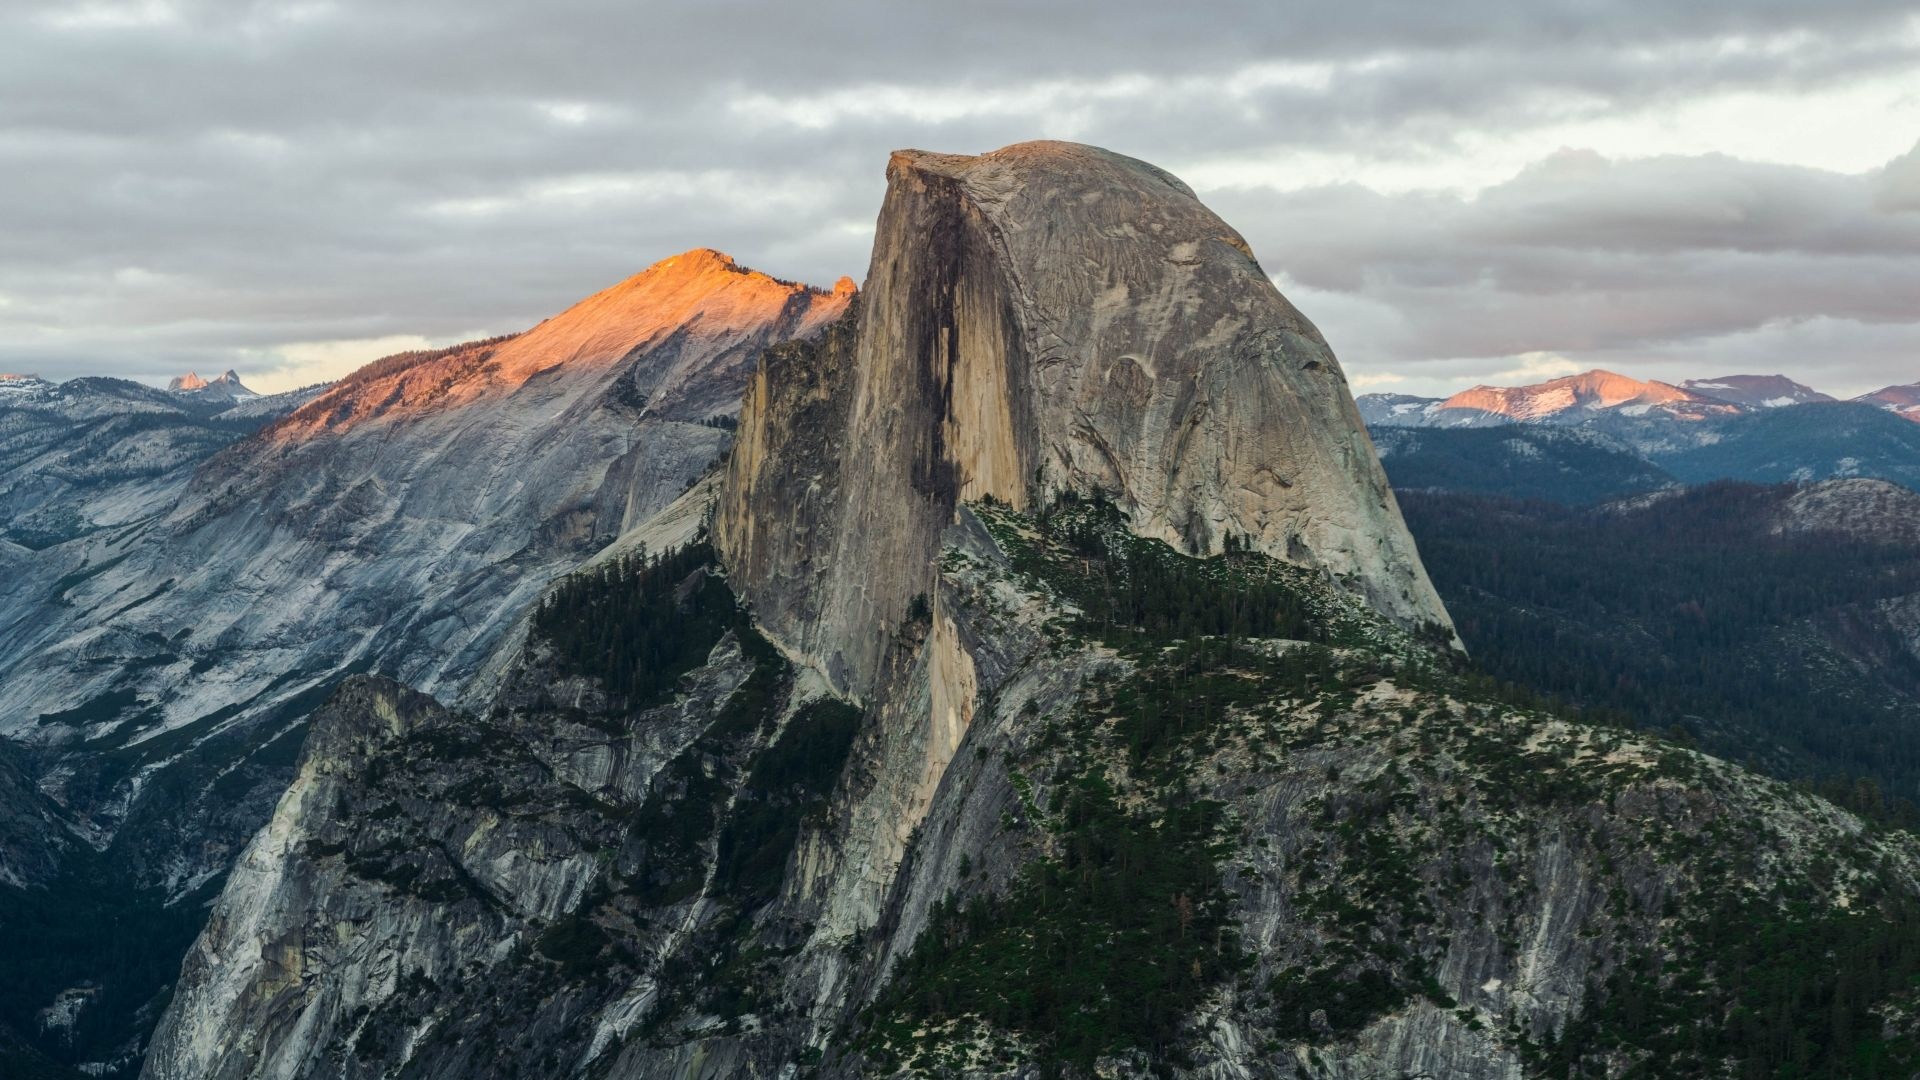 Yosemite National Park, 1920x1080 wallpapers, Yosemite backgrounds, 1920x1080 Full HD Desktop